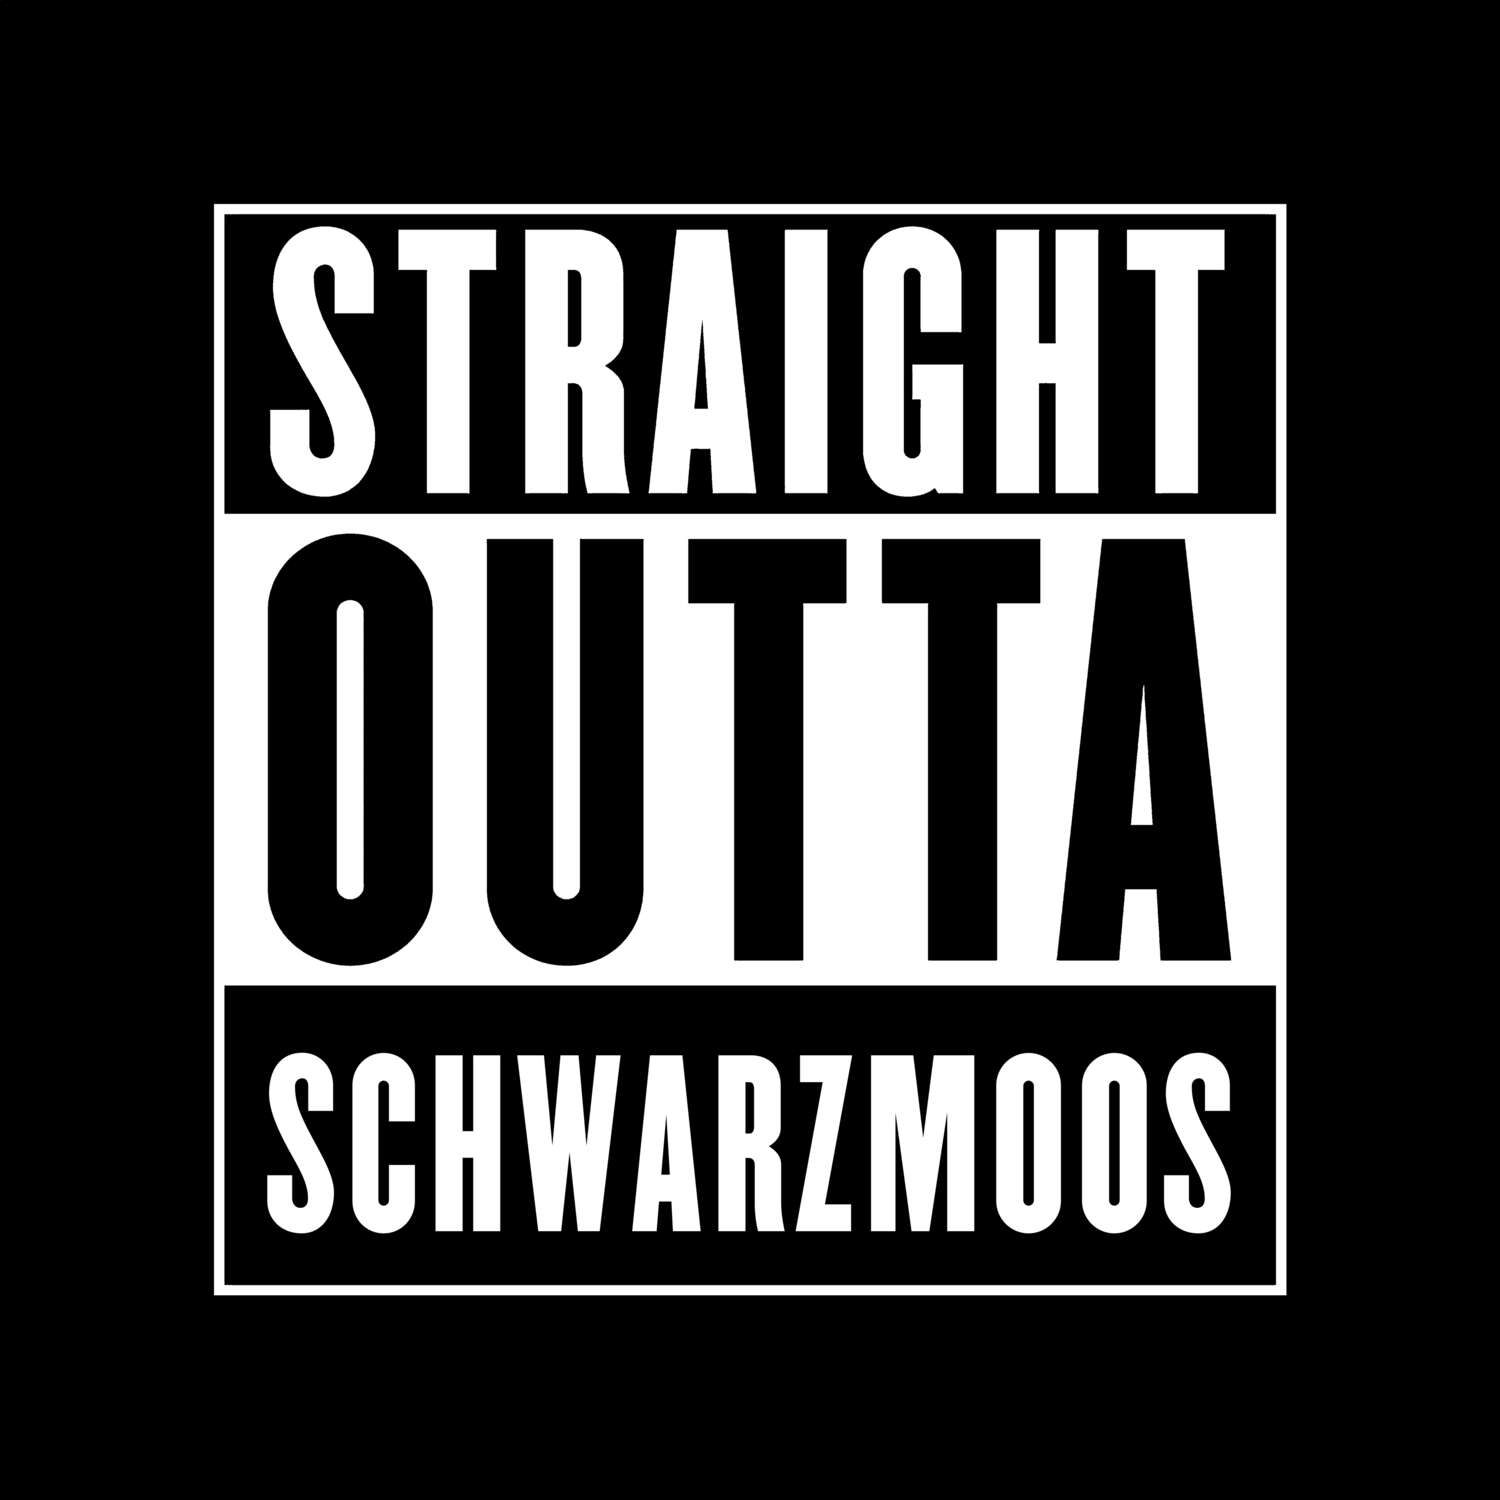 Schwarzmoos T-Shirt »Straight Outta«